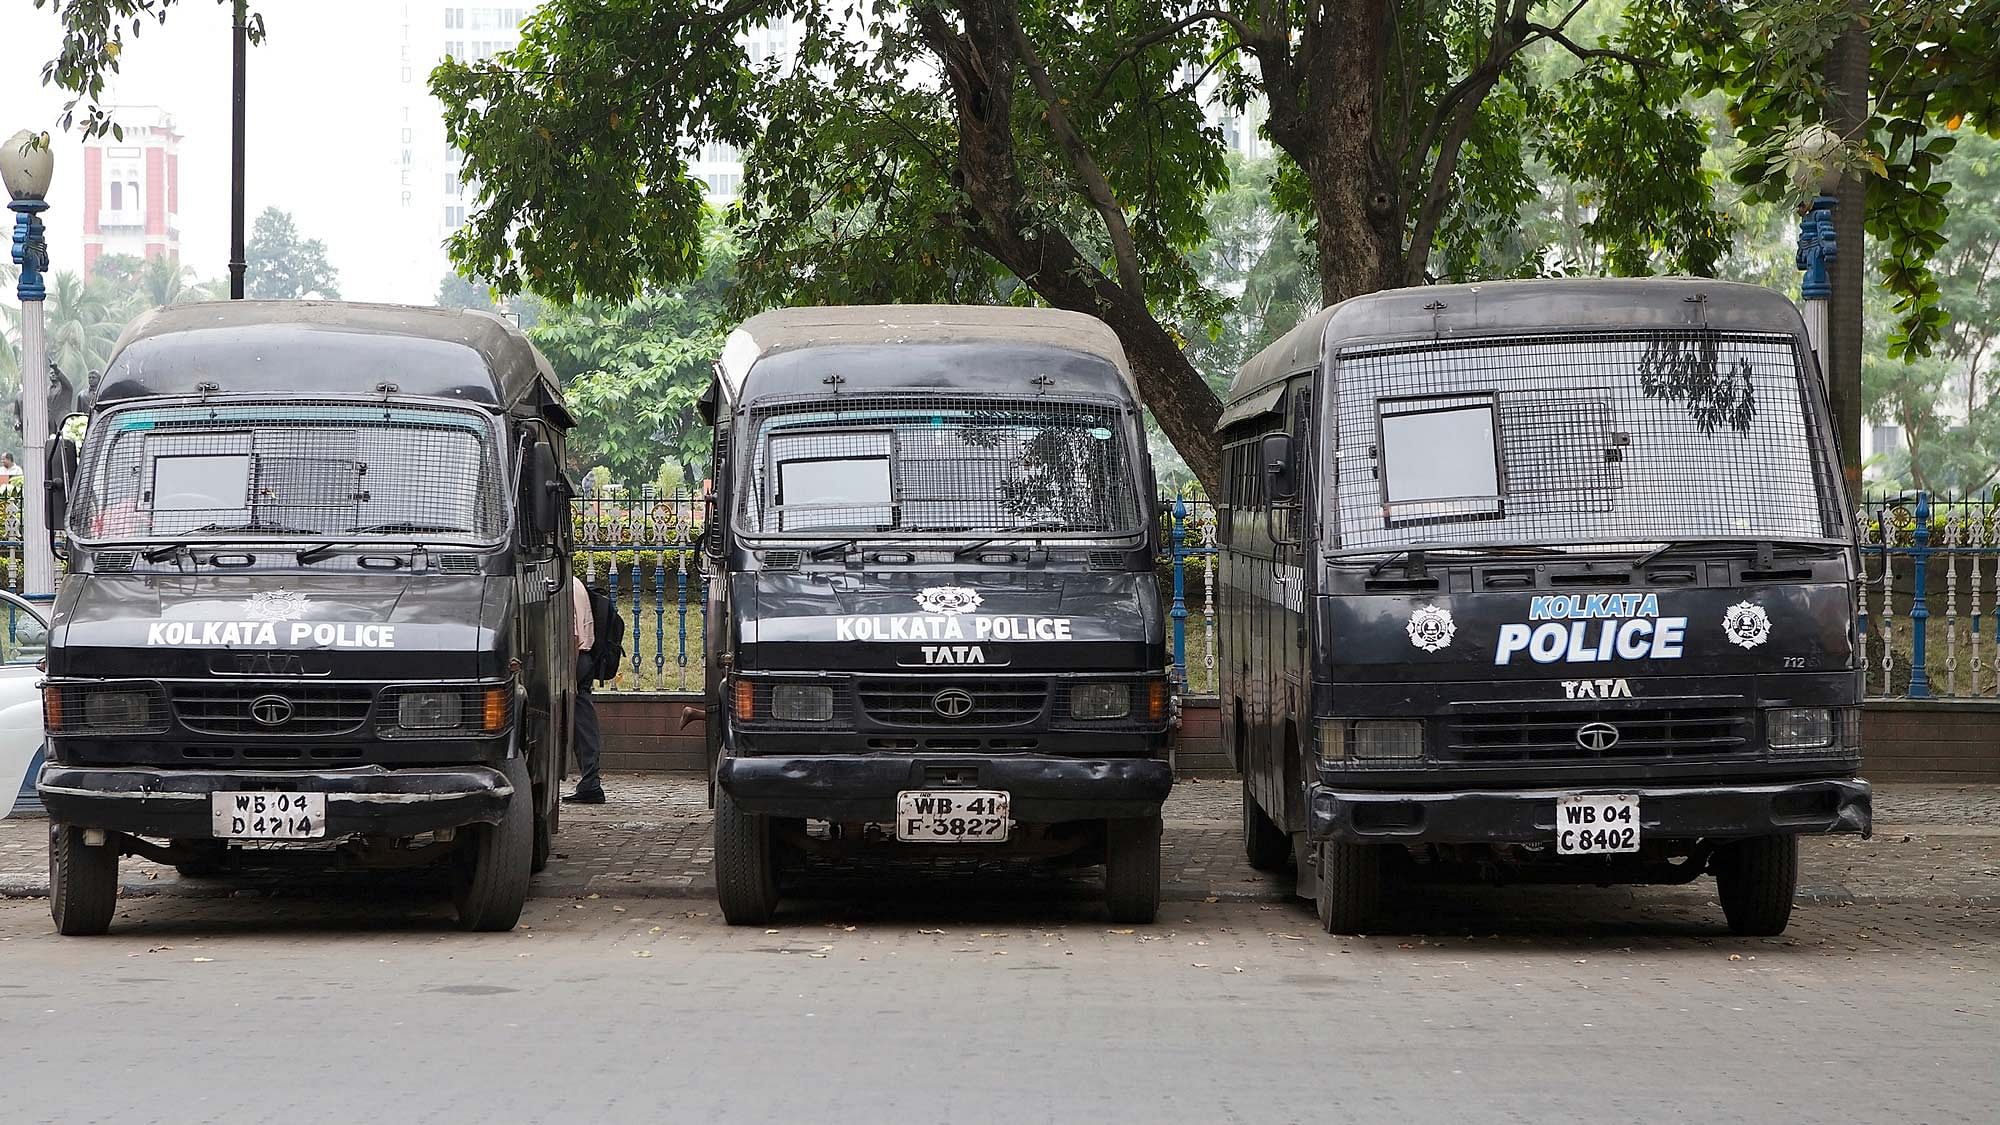 Kolkata police van. (Photo: iStock)